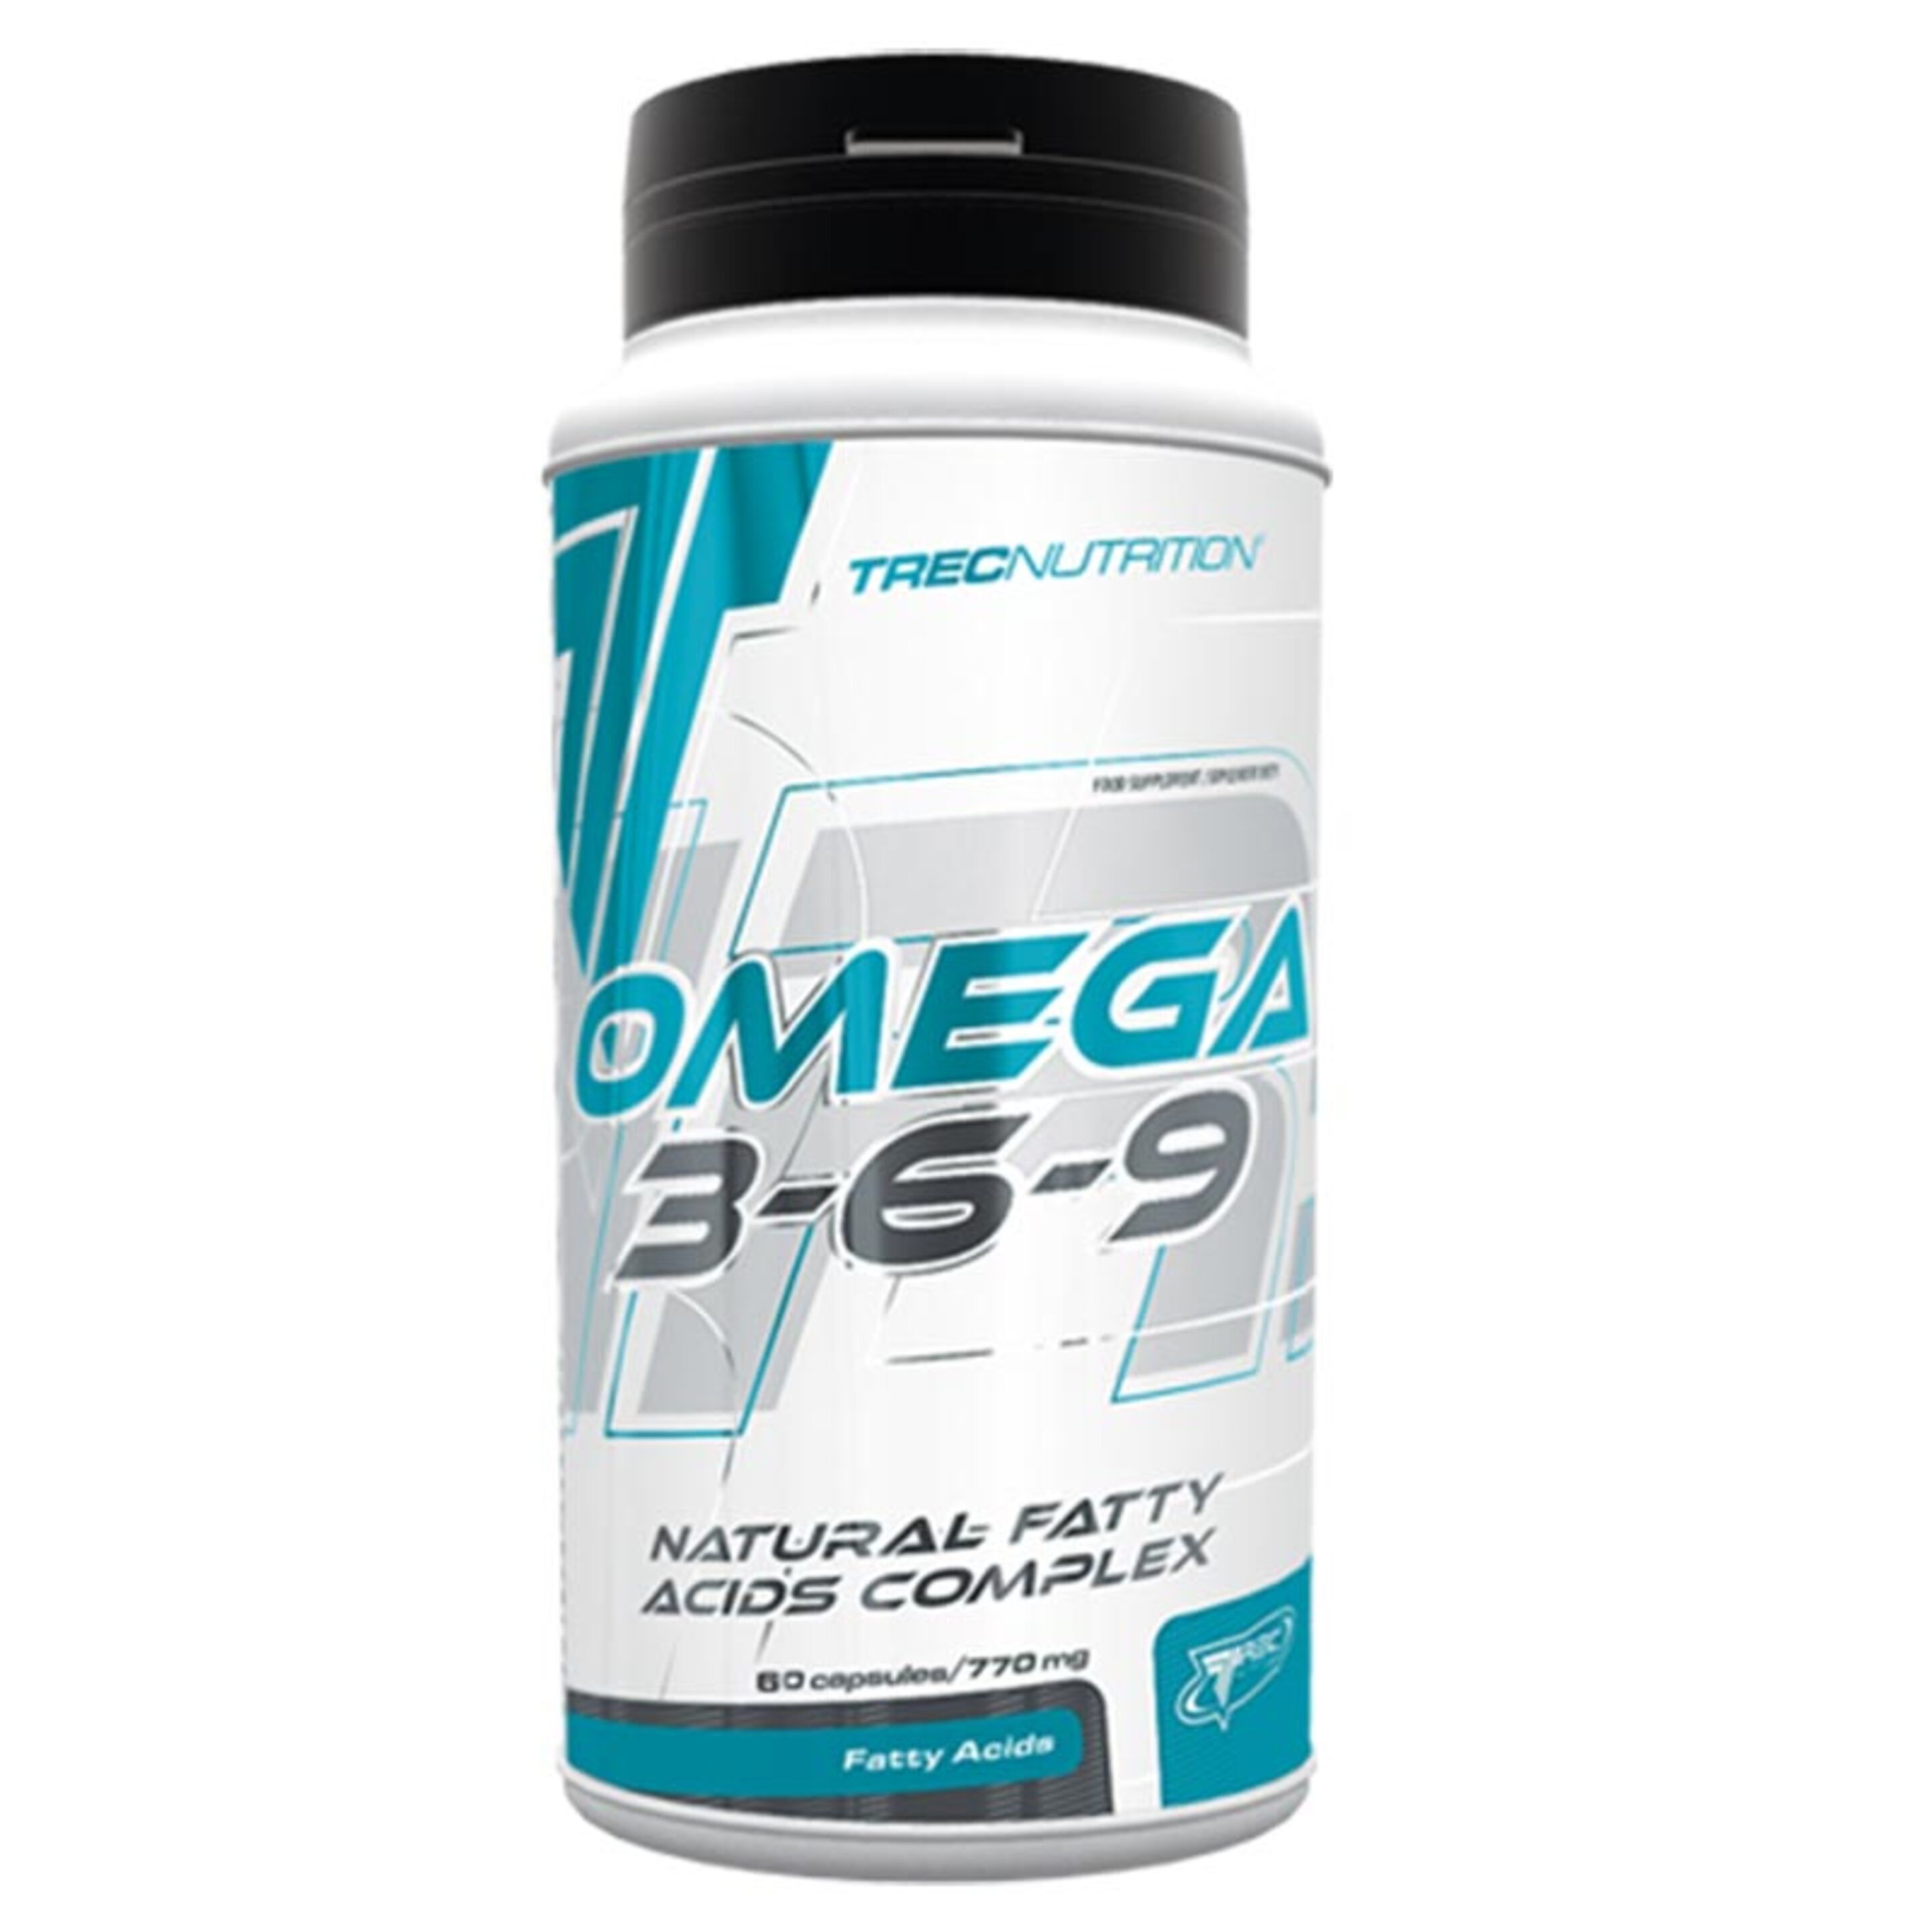 Omega 3-6-9 - 60caps